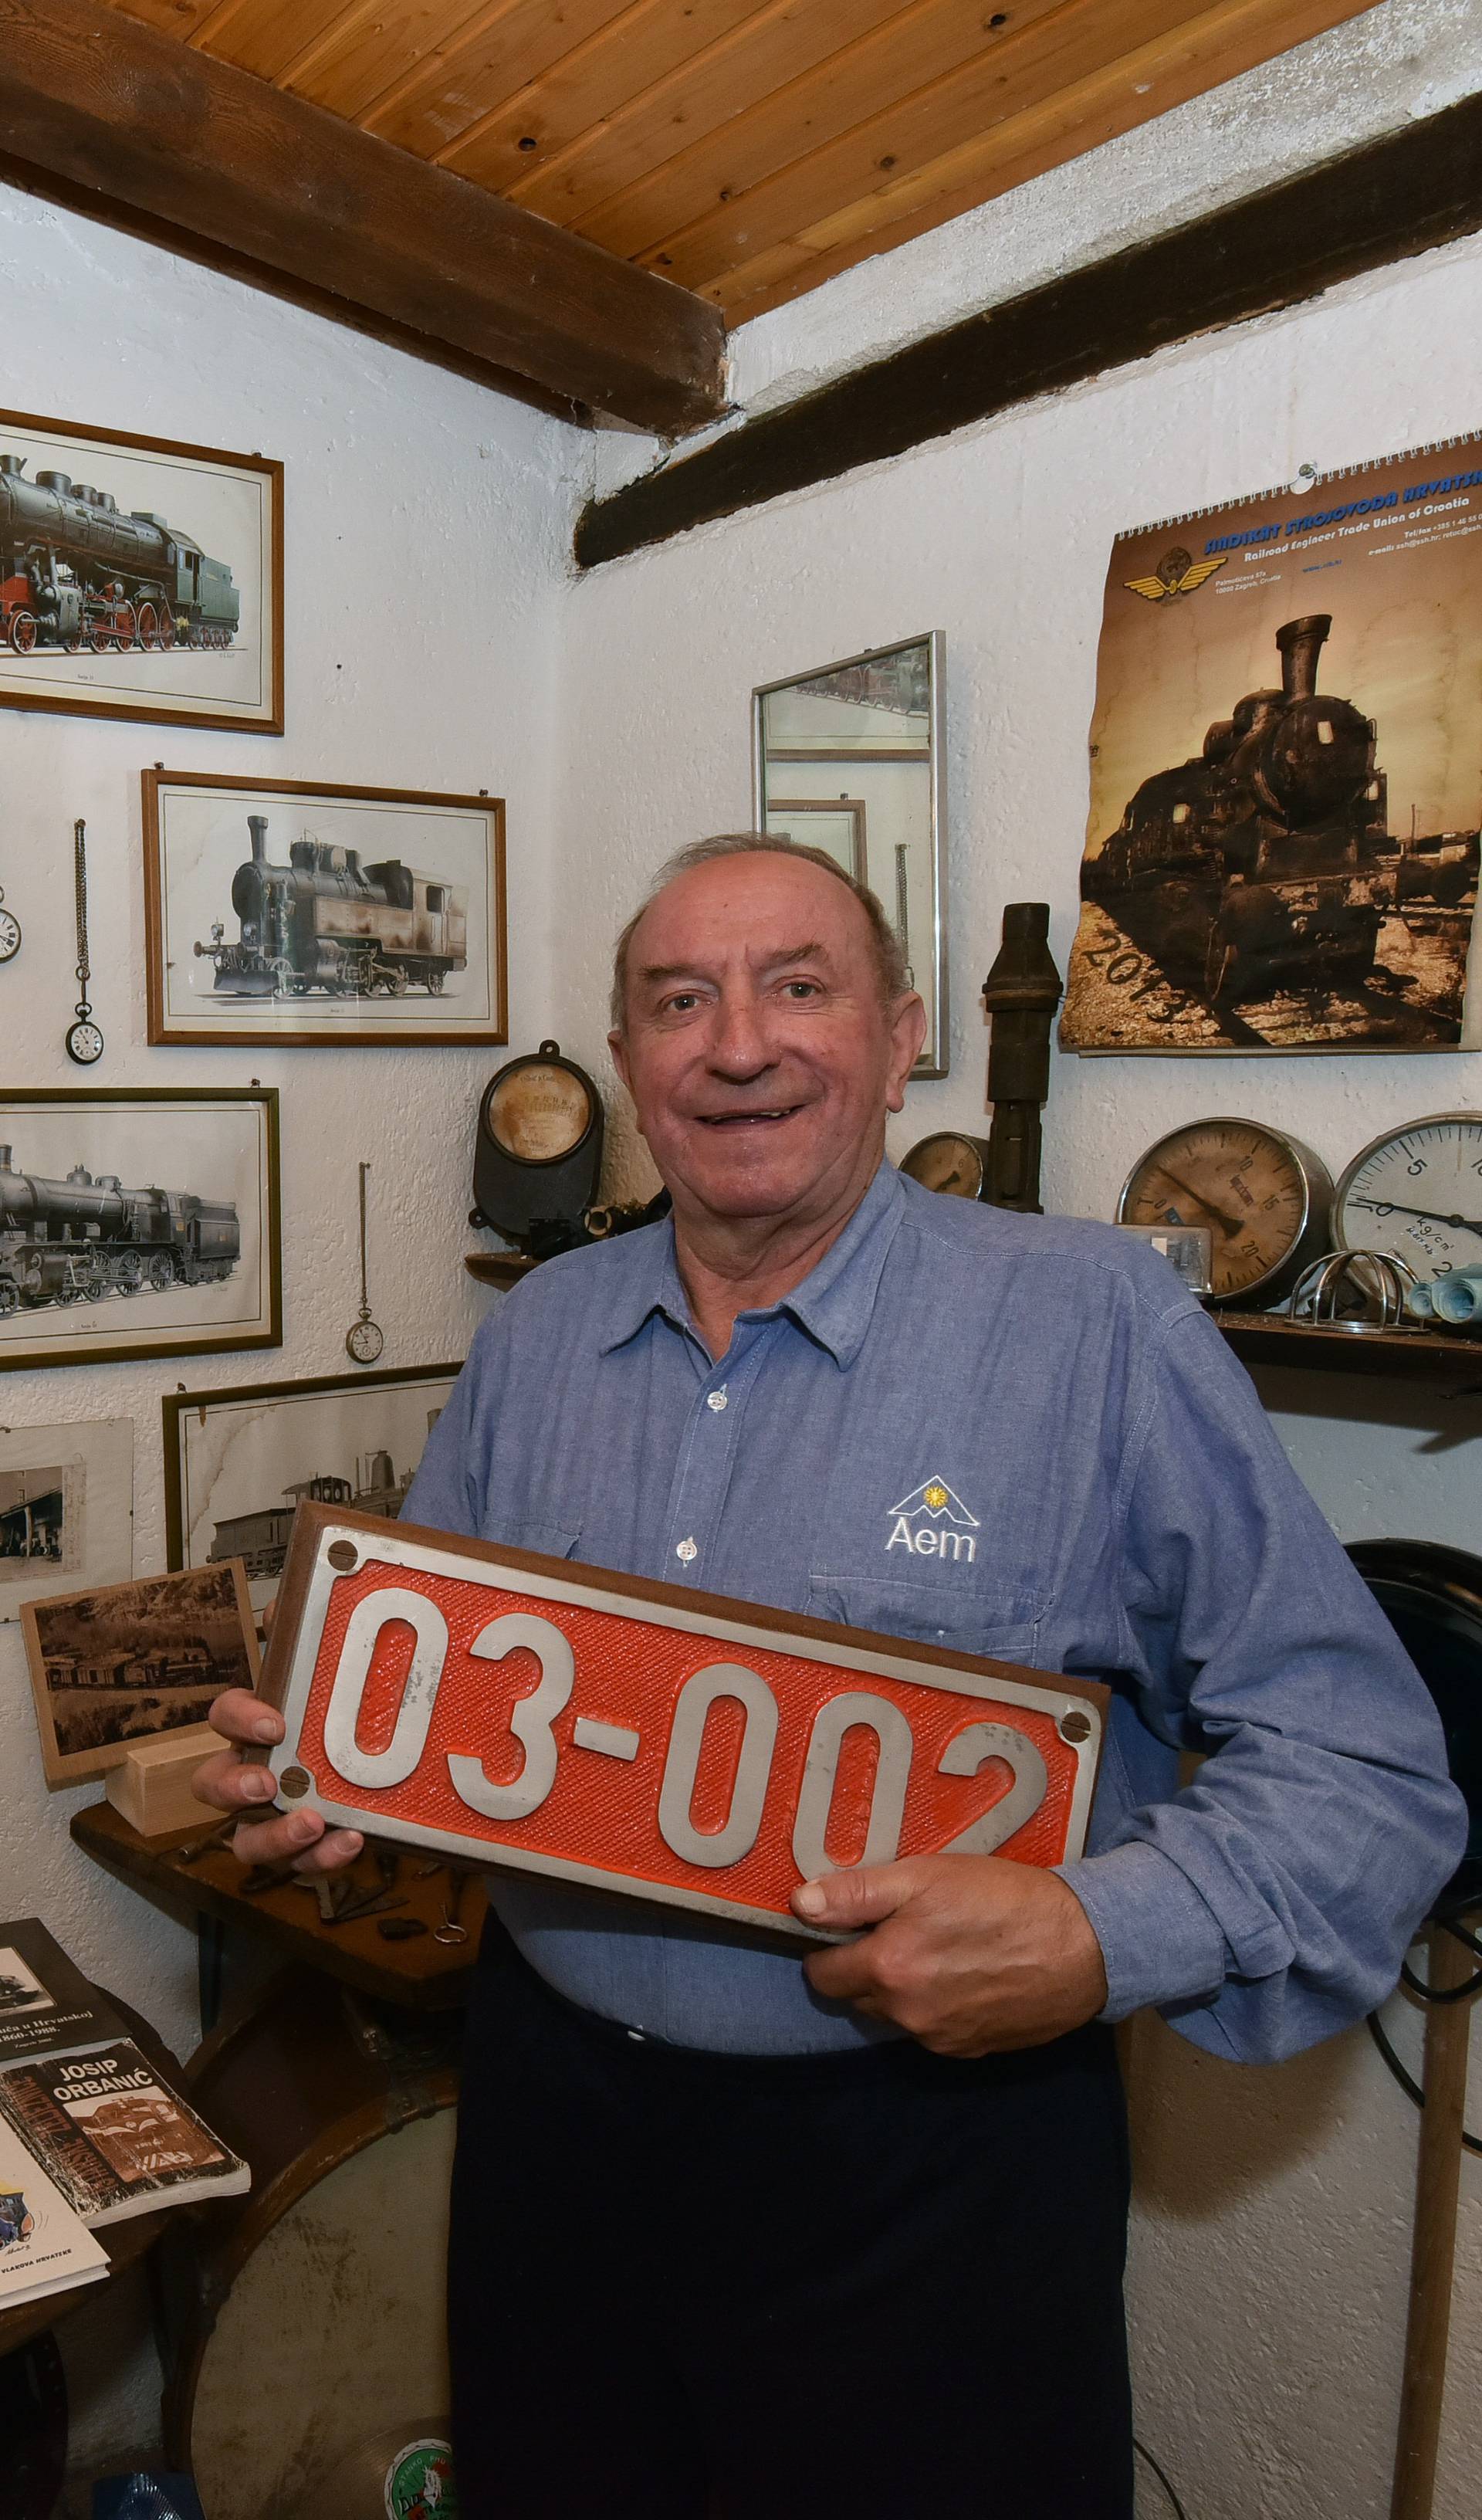 Kralj vlakova: Bivši strojovođa otvorio je vlastiti muzej u Roču